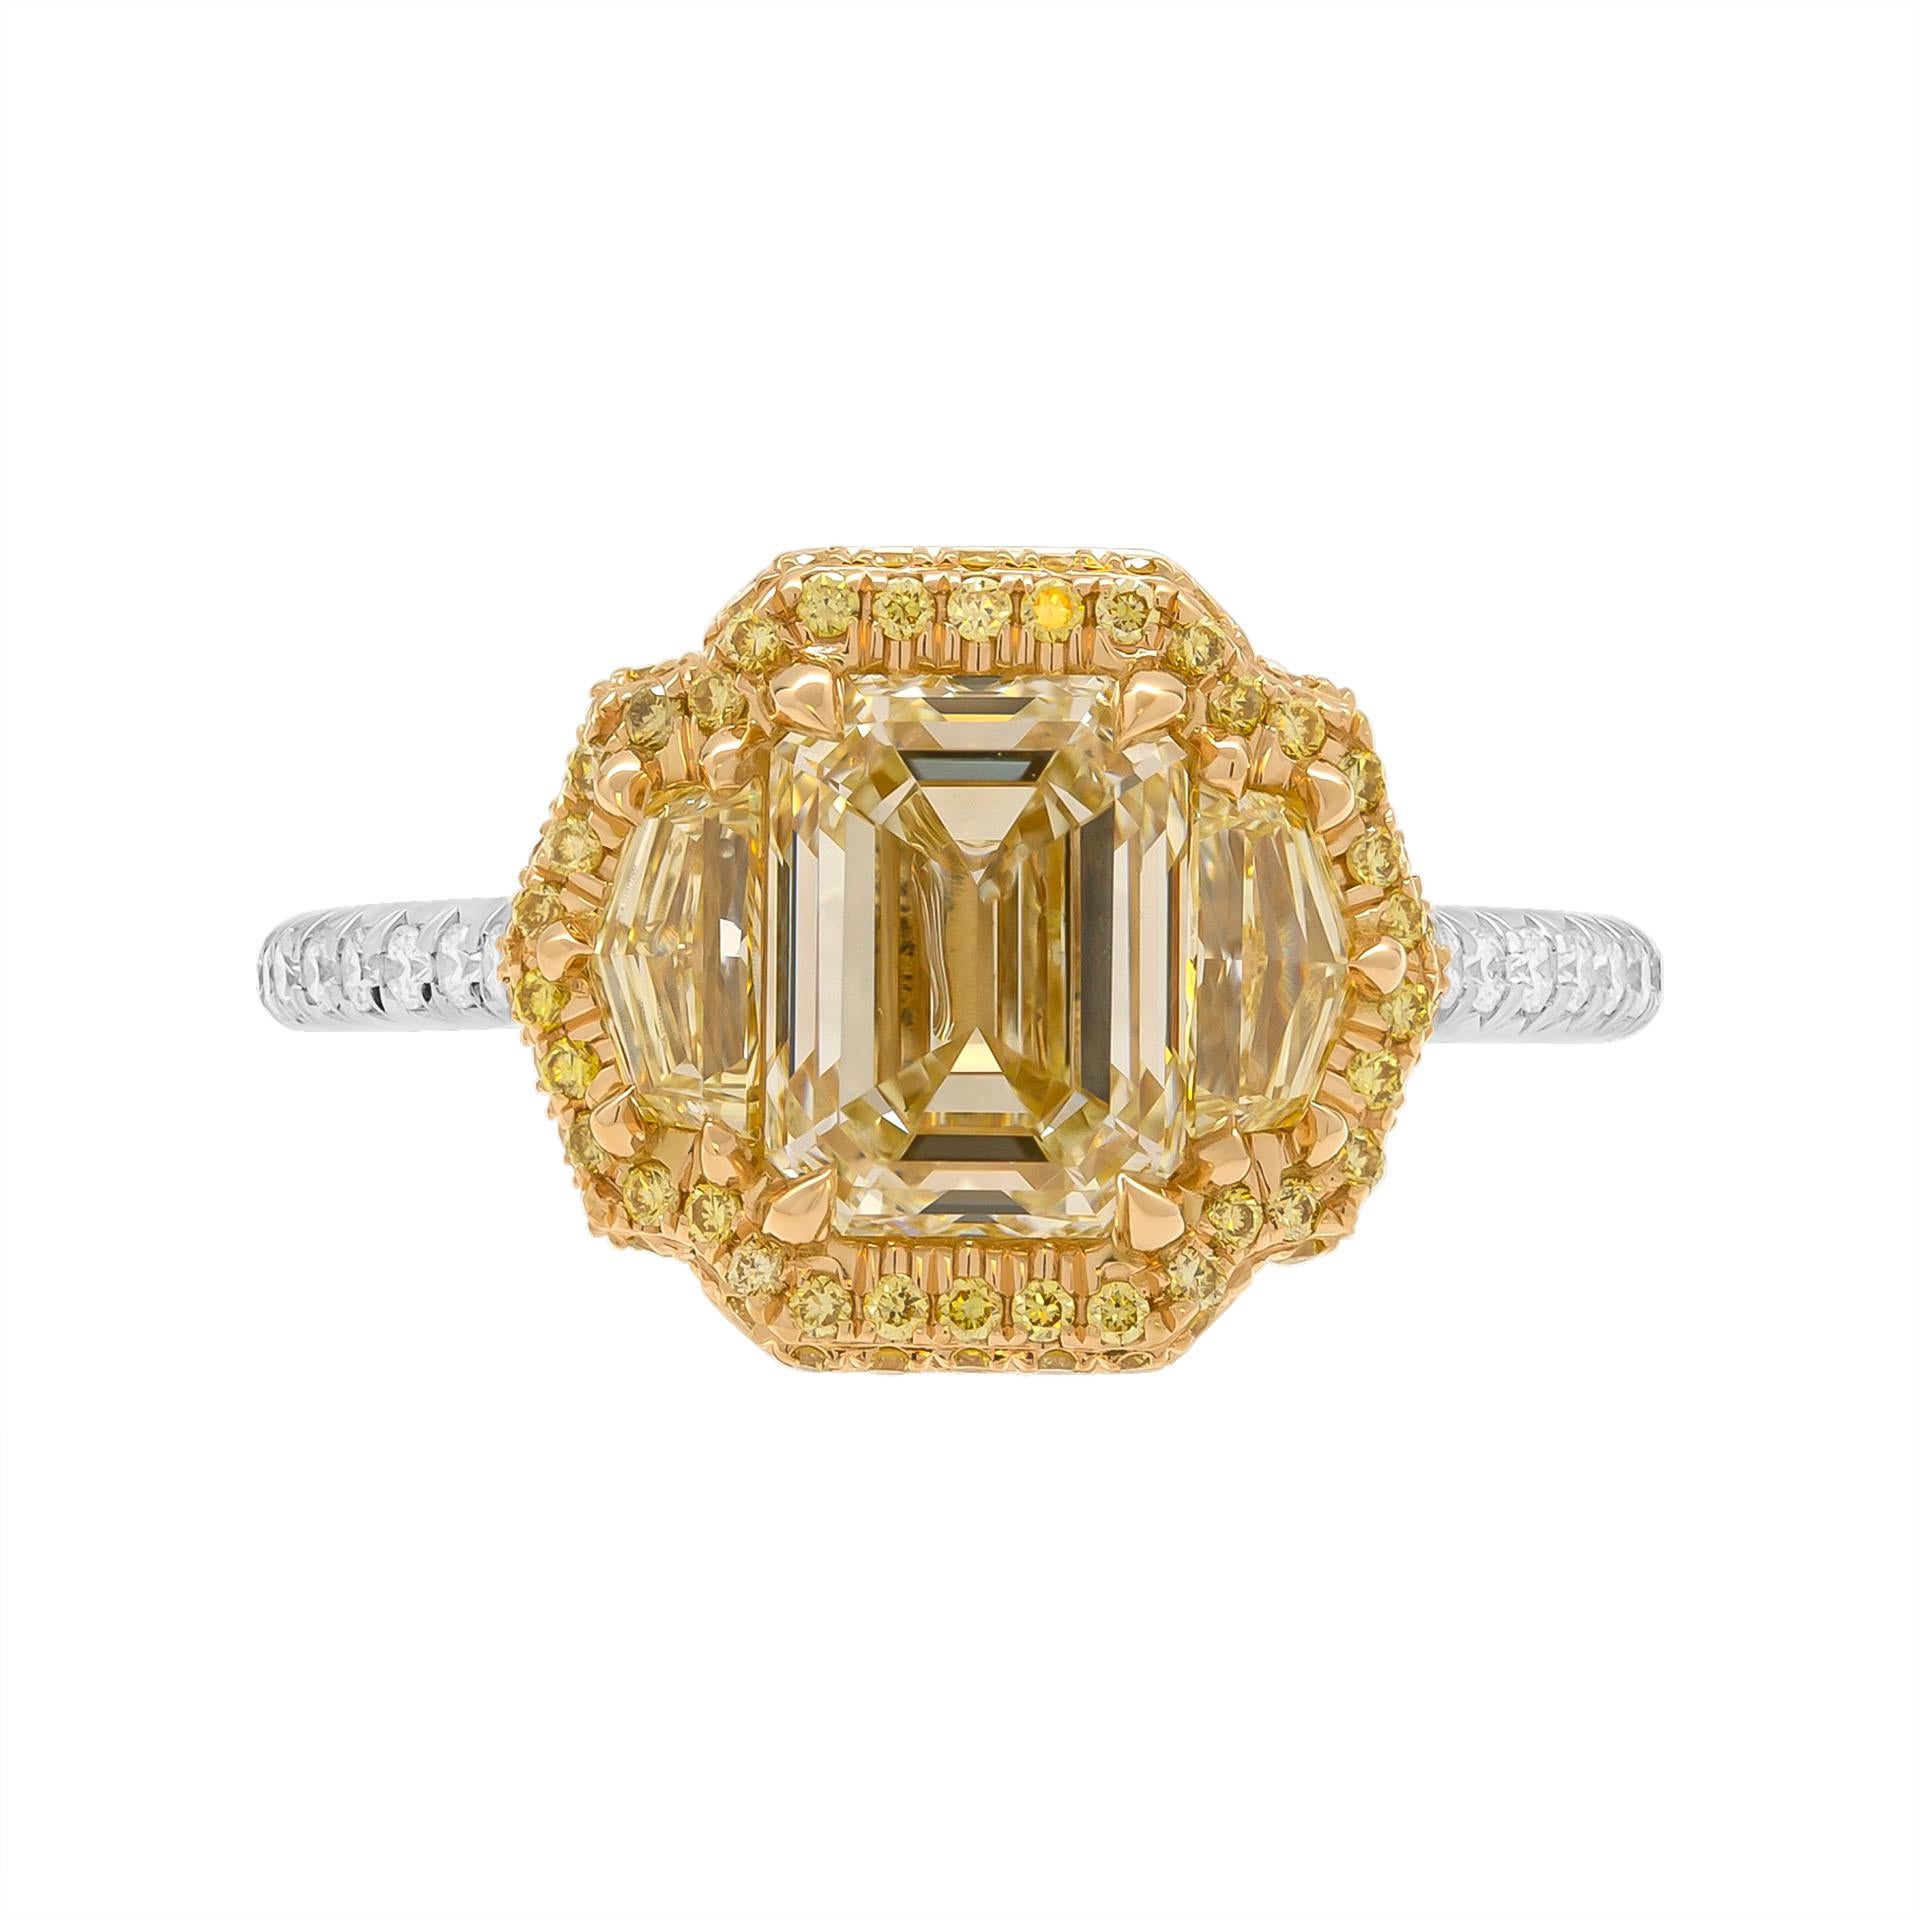 3 stone ring in Platinum & 18K Yellow Gold
Center: 2.01ct W-X Range VS1 Emerald shape diamond GIA#6415878666 
Has a look of a Fancy Yellow Diamond!\

Side stone: 
0.20ct Fancy Light Yellow VVS1 trapezoid shape diamond GIA#2221772968
0.21ct Y-Z VVS1